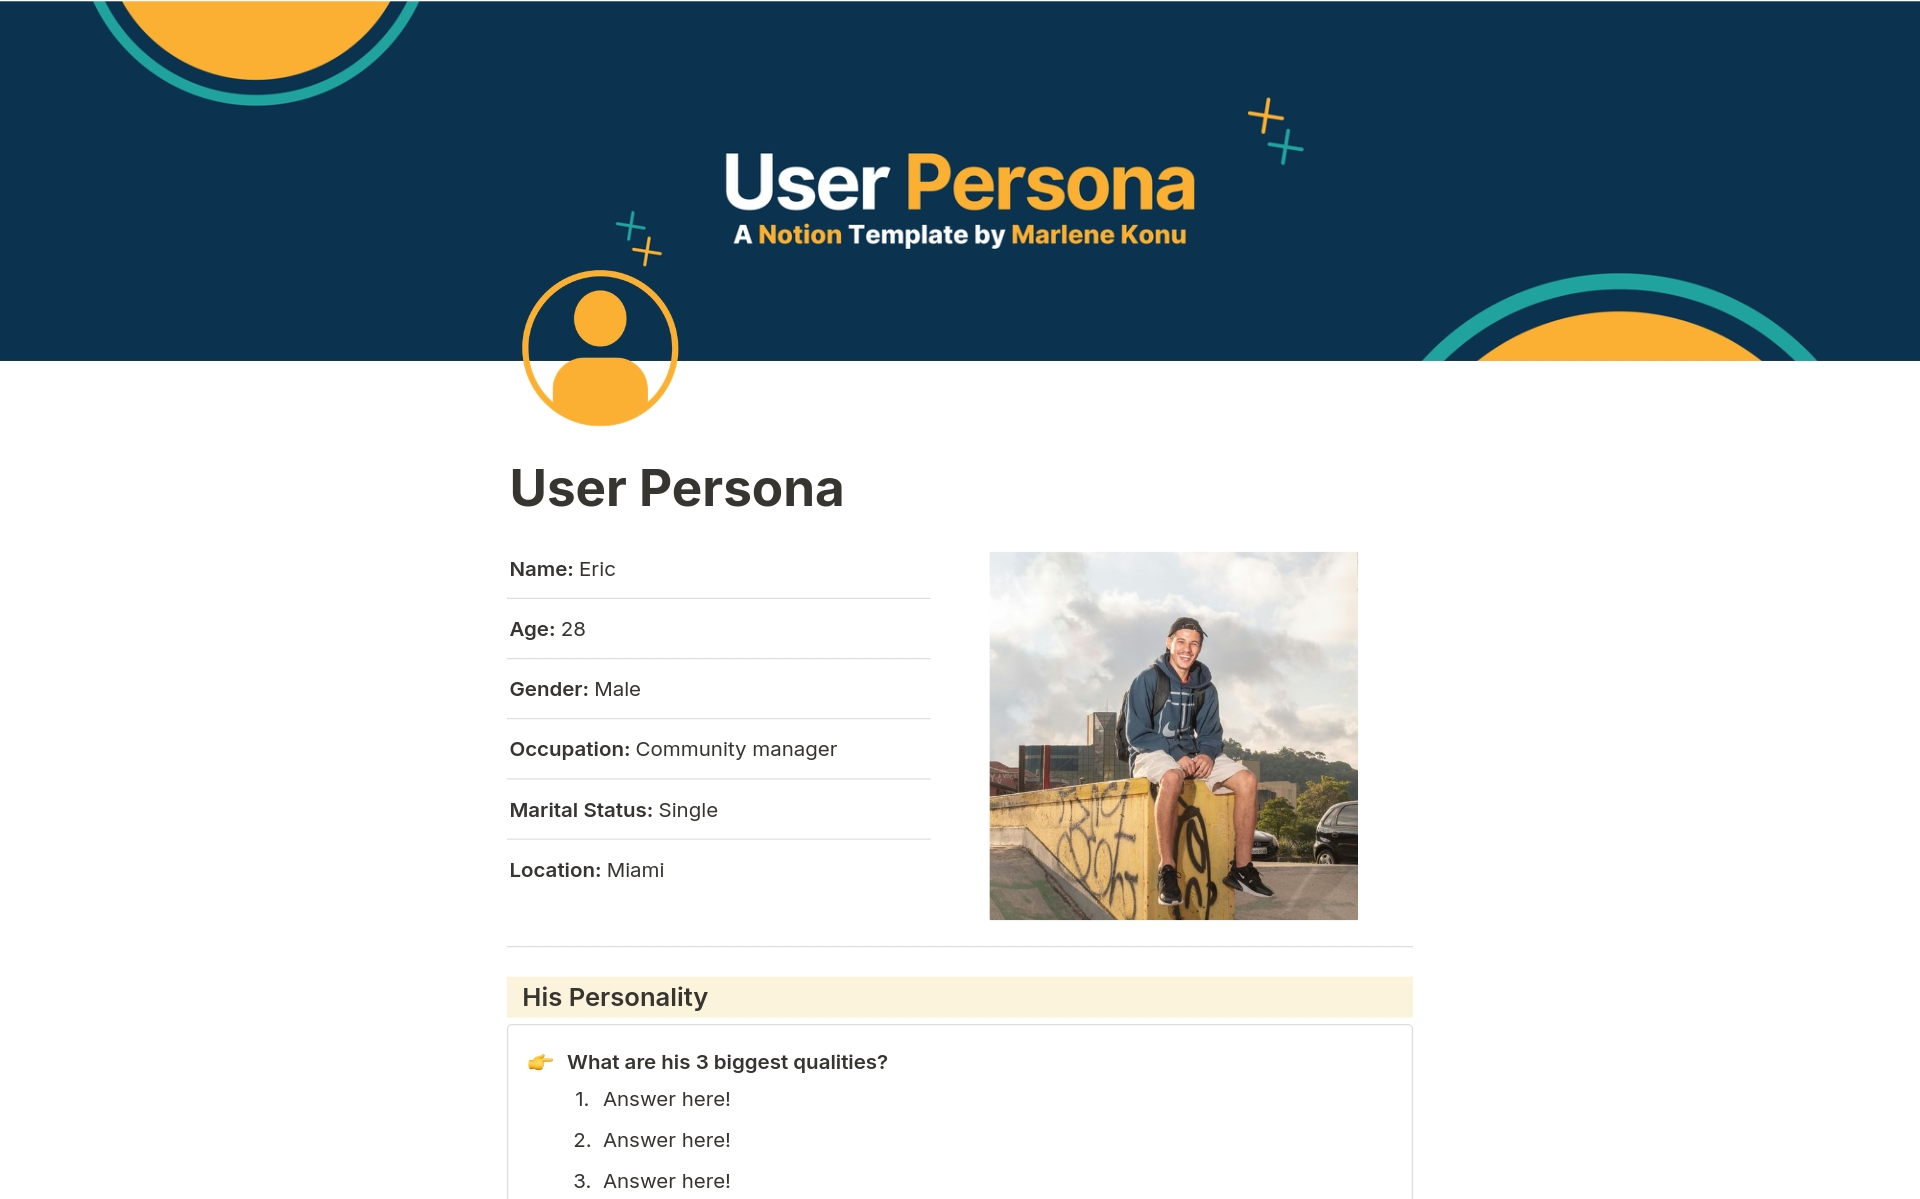 User Persona Notion Template & Workbookのテンプレートのプレビュー